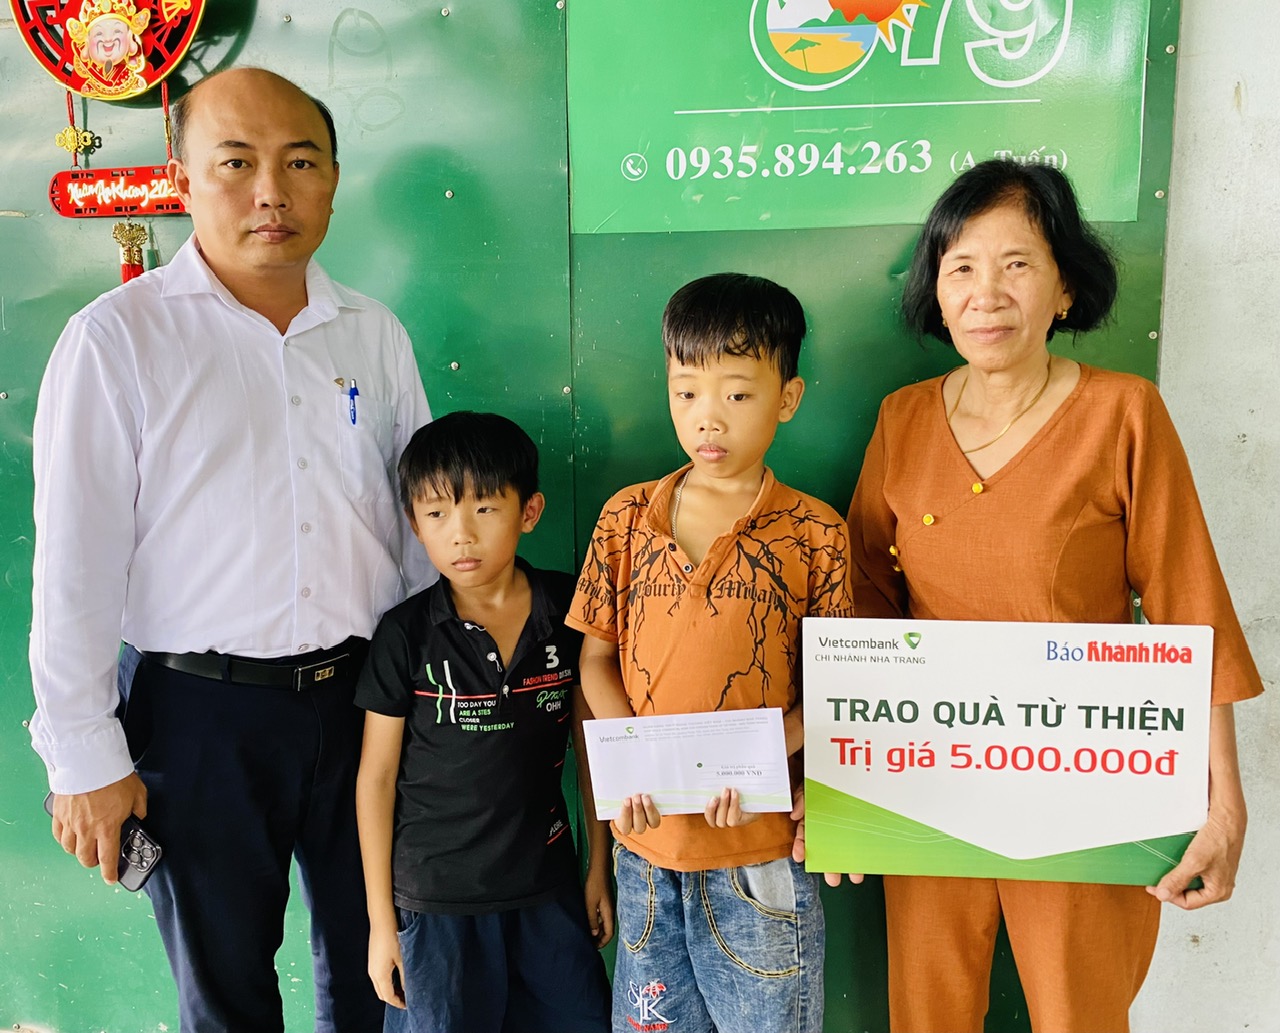 The representative of Vietcombank Nha Trang giving the money to the family 

